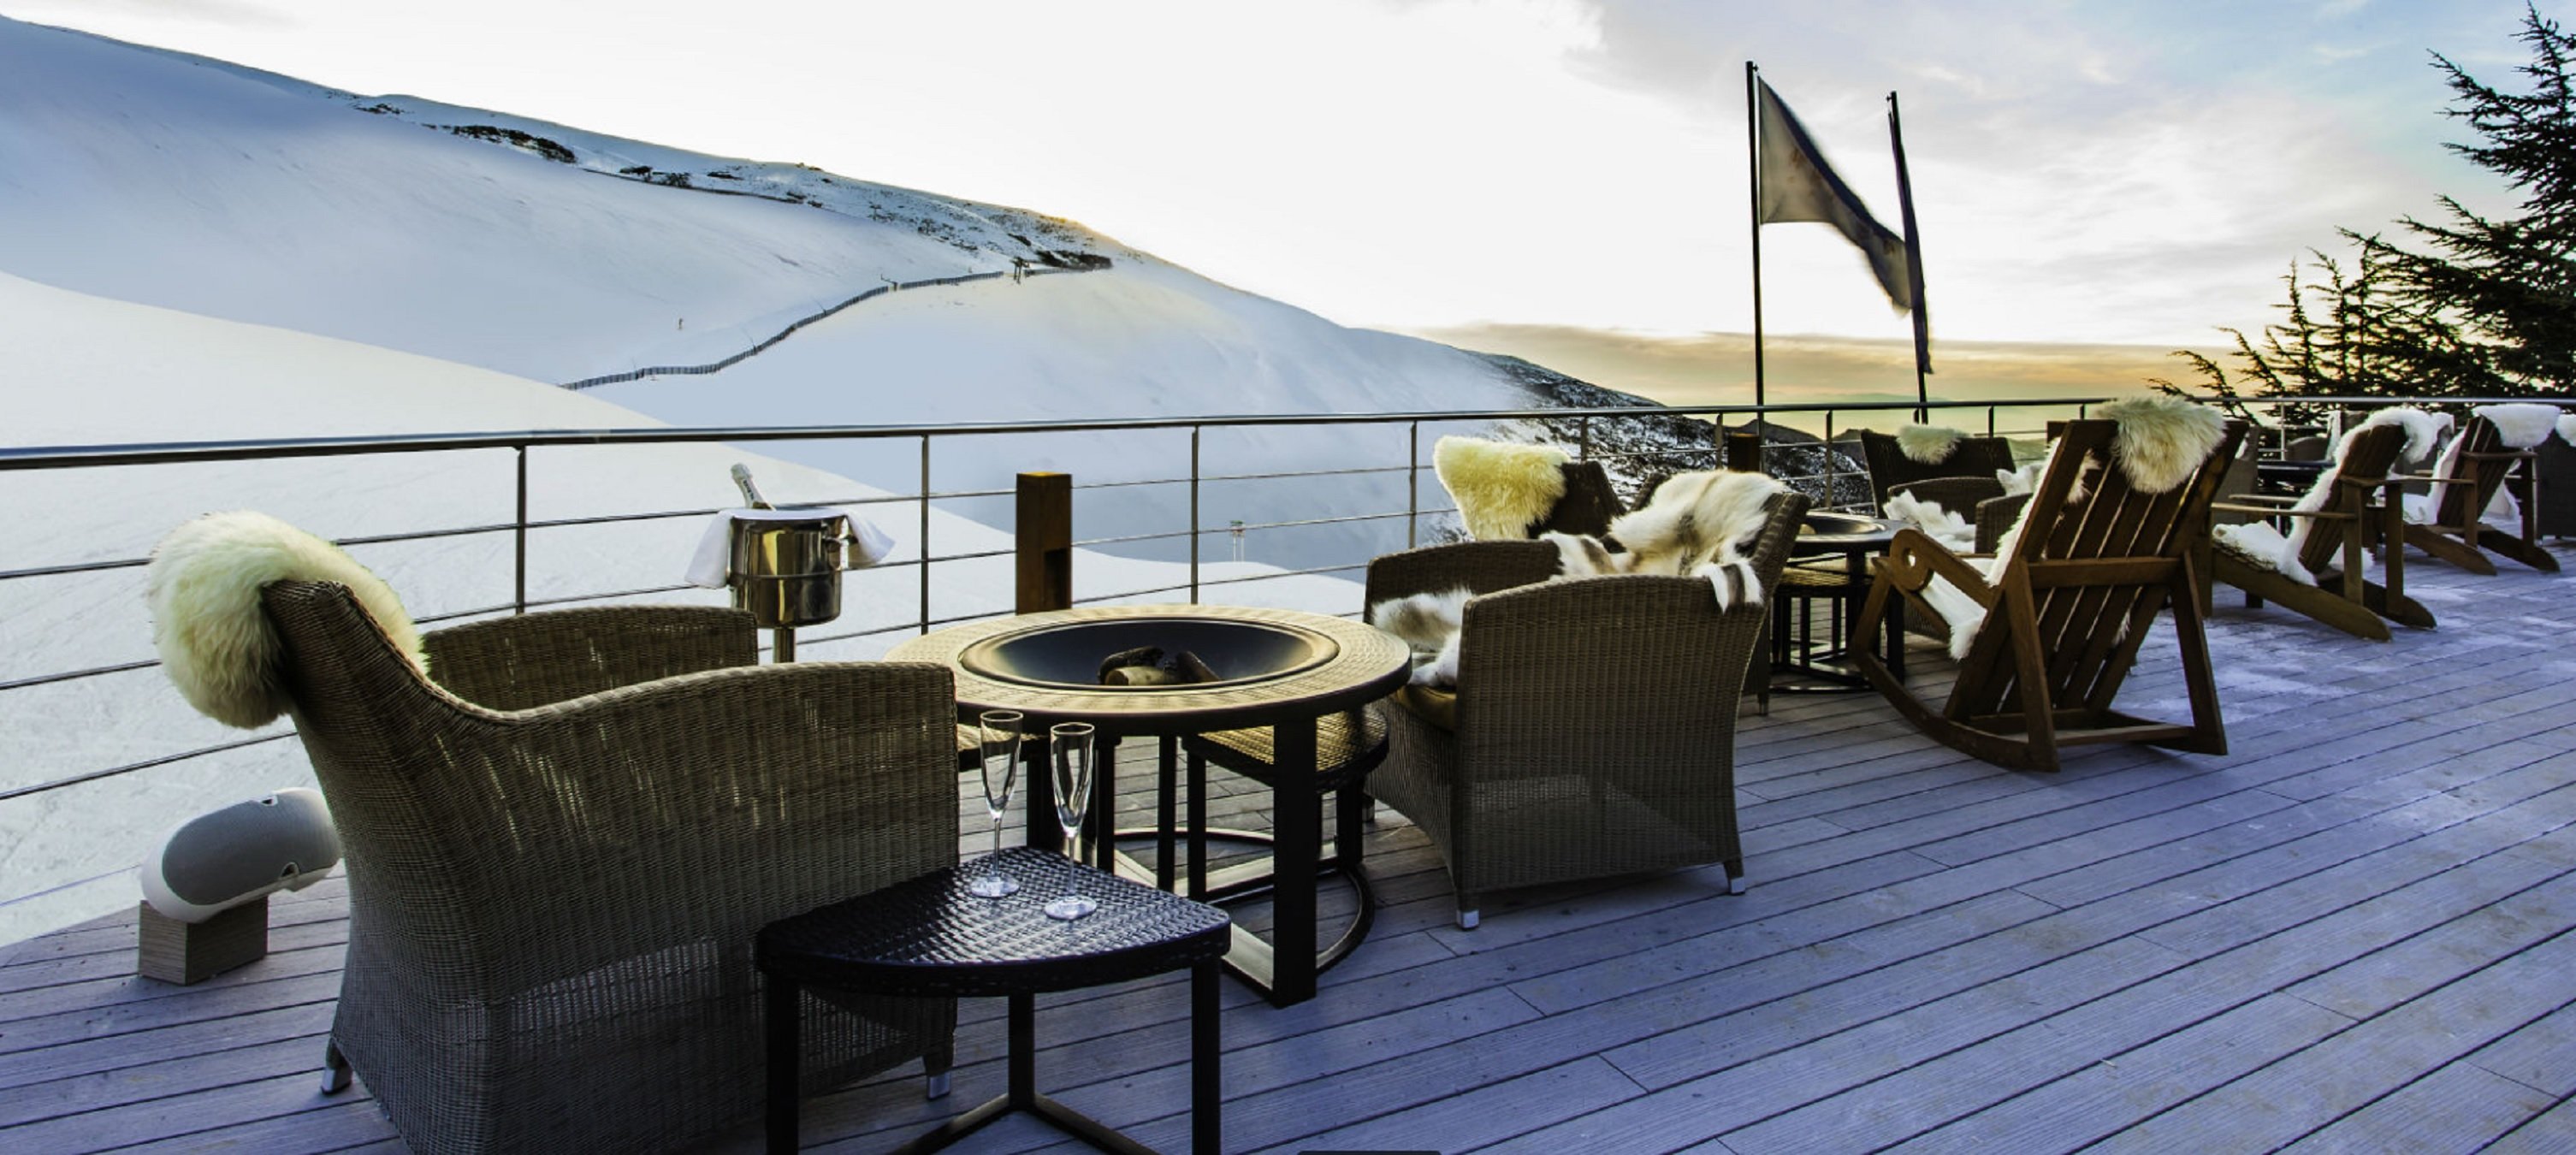 Sun Deck Hotel El Lodge terrassa